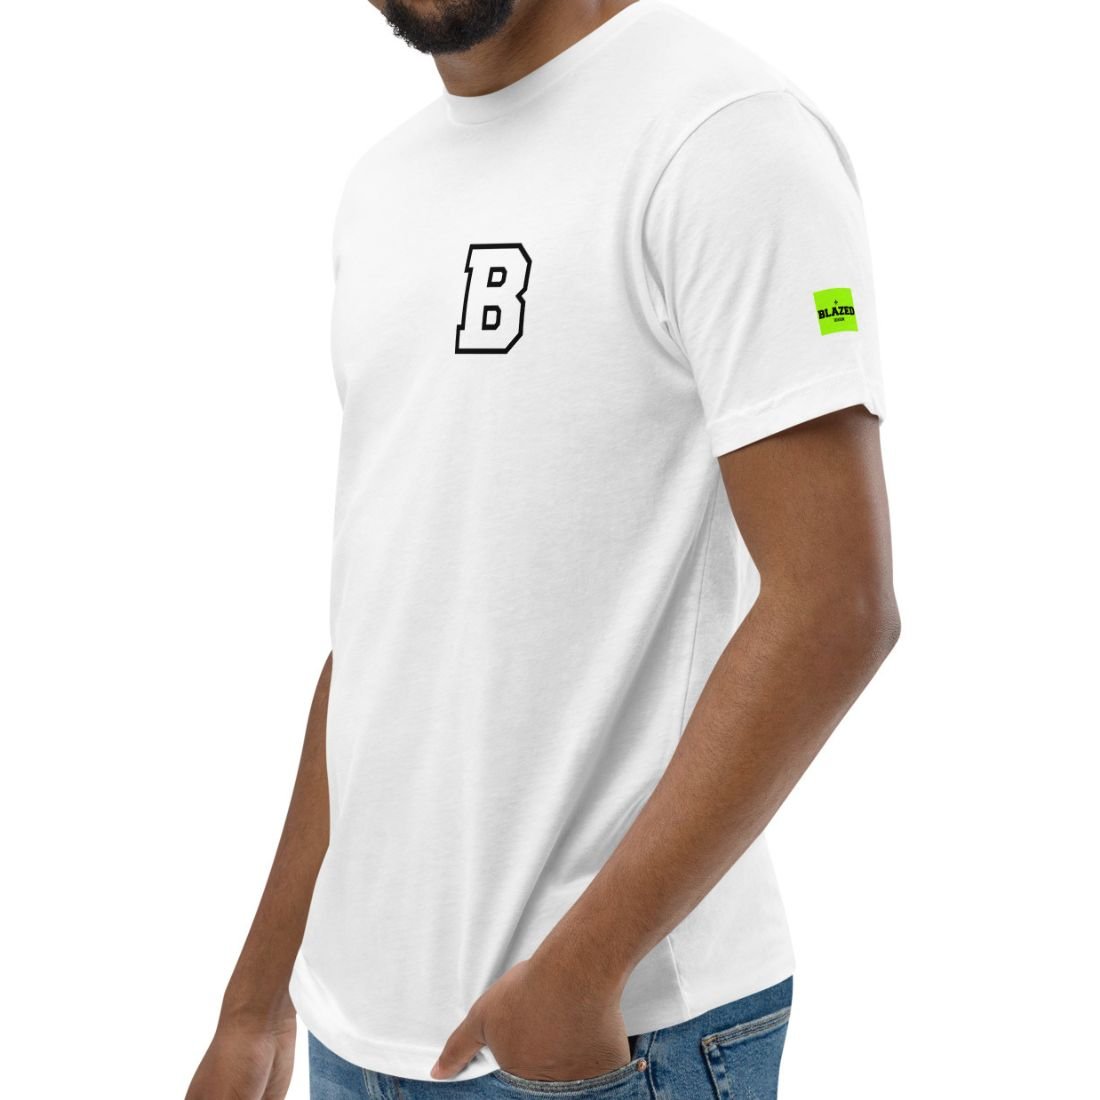 B & Leaf Unisex T-Shirt - White - Blazed Wear